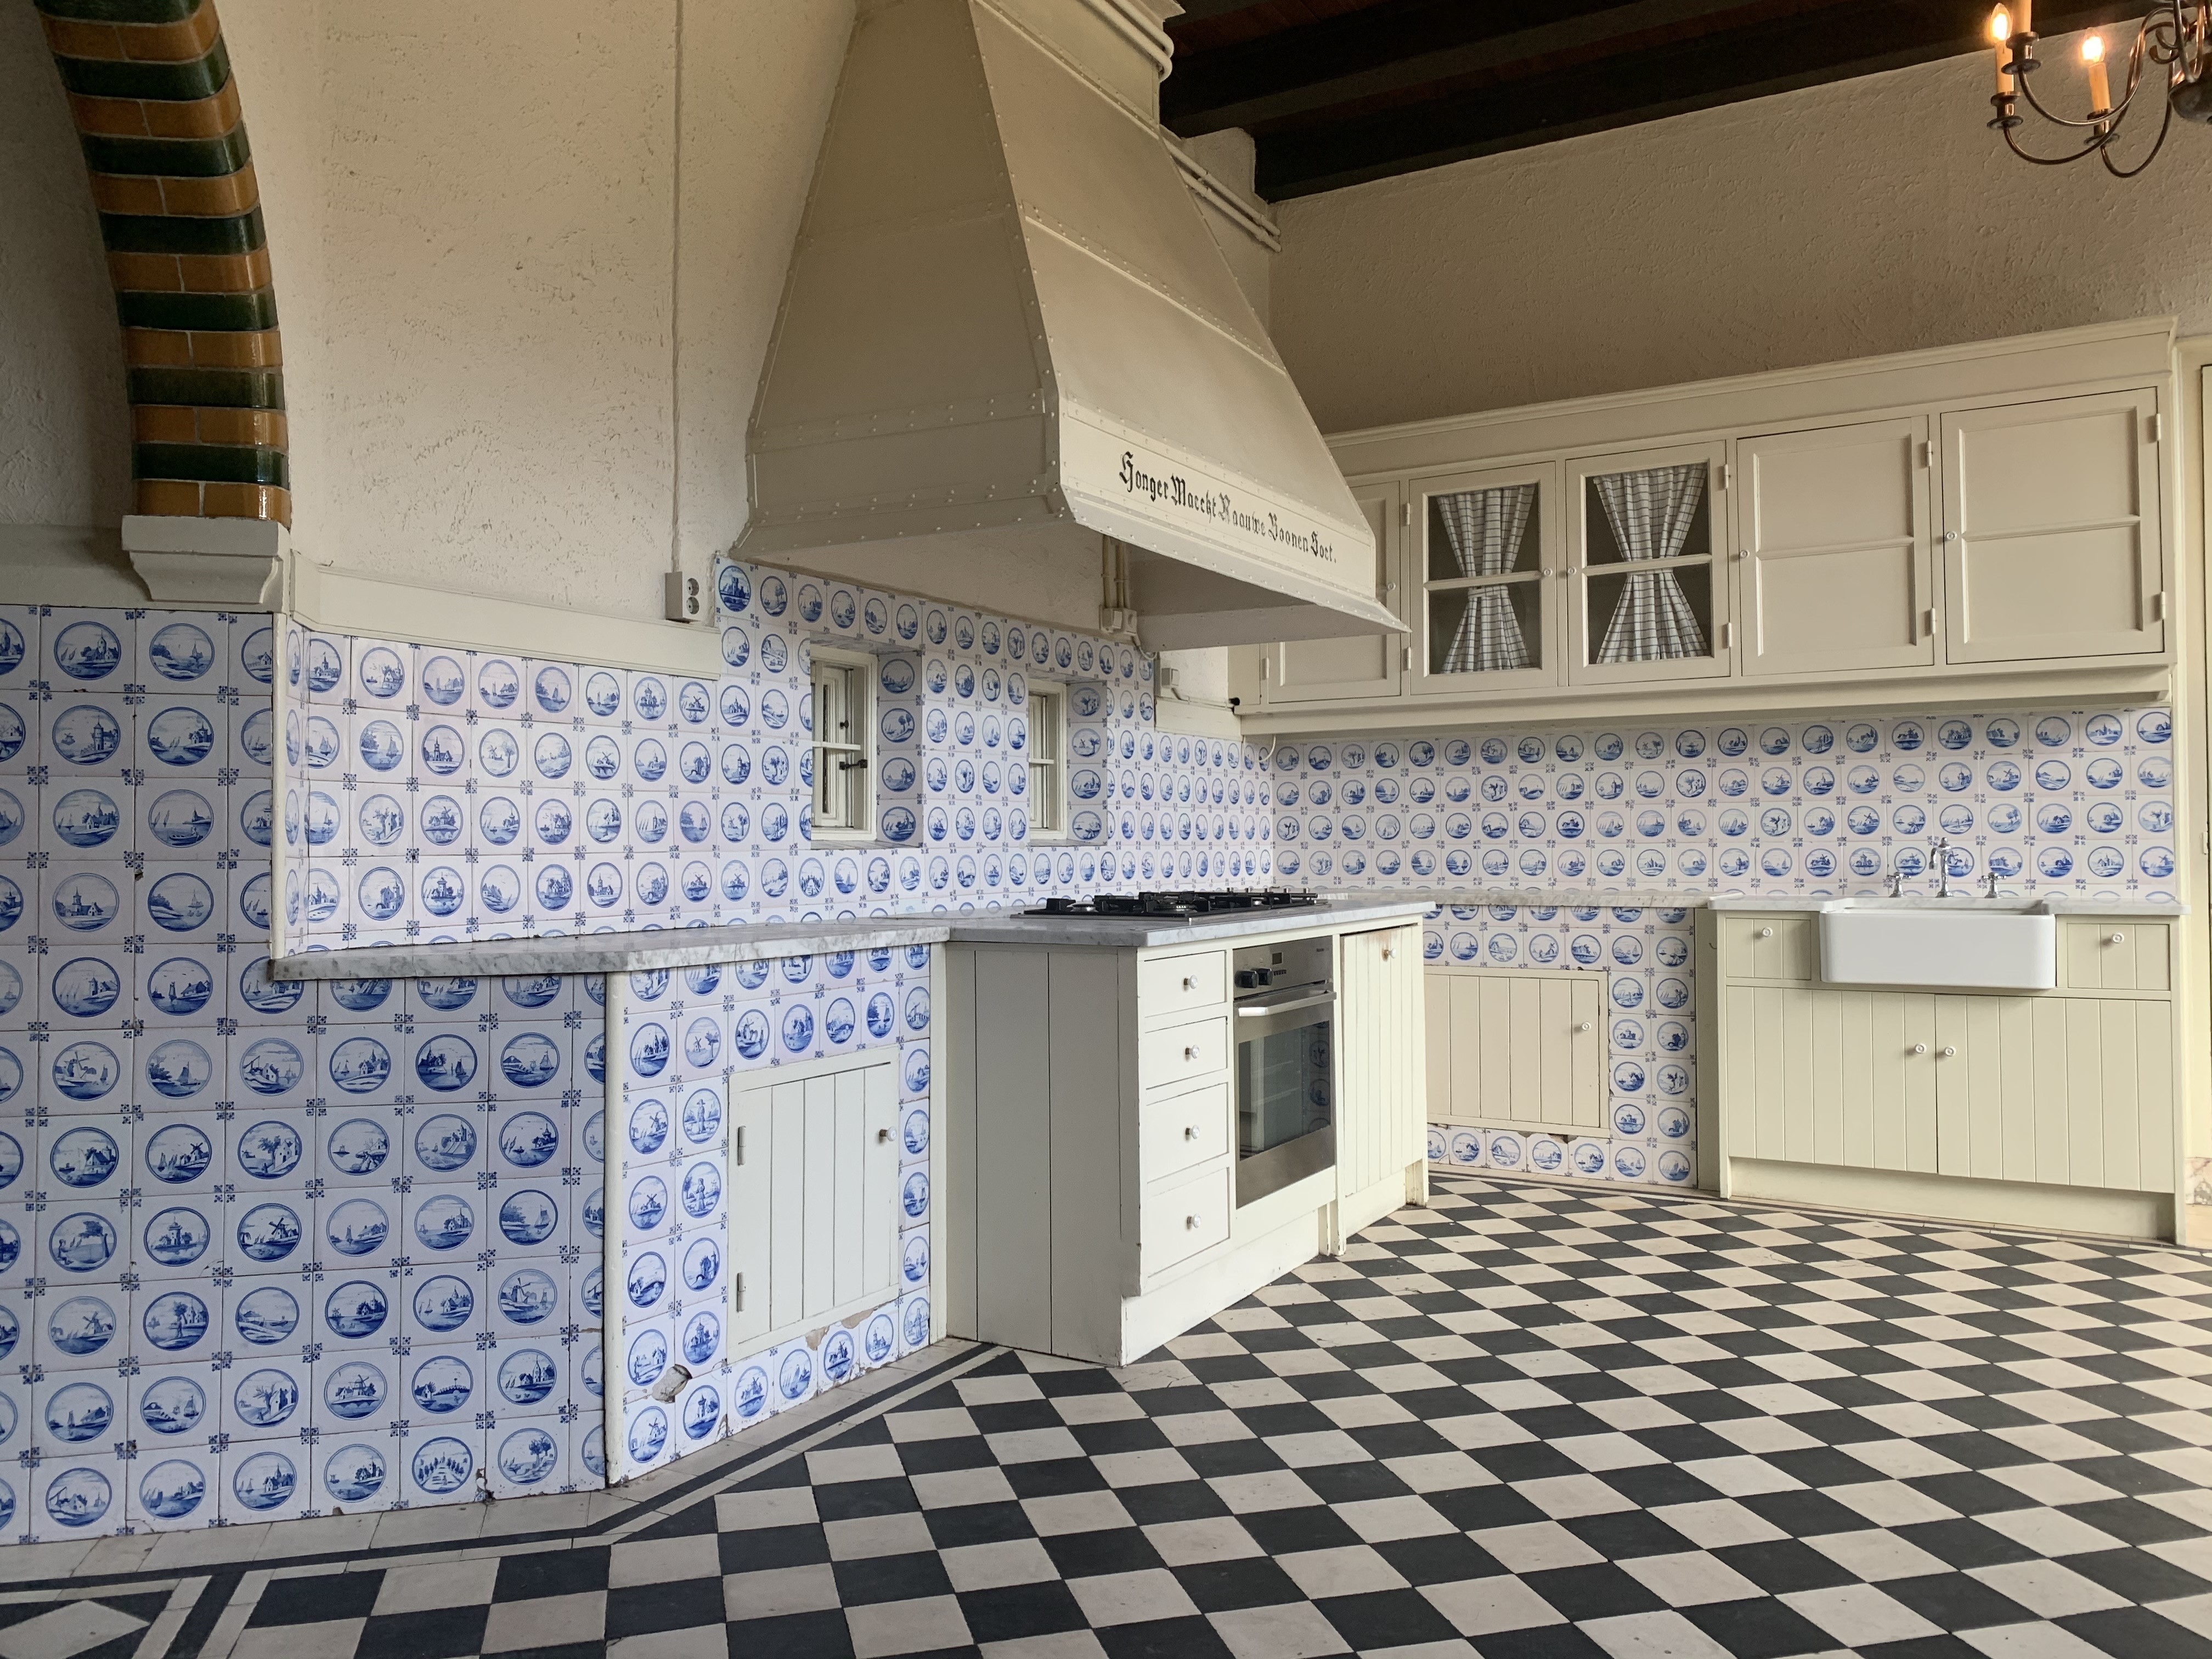 Keuken en eetkamer betegeling/ Kitchen and room tiling - Online